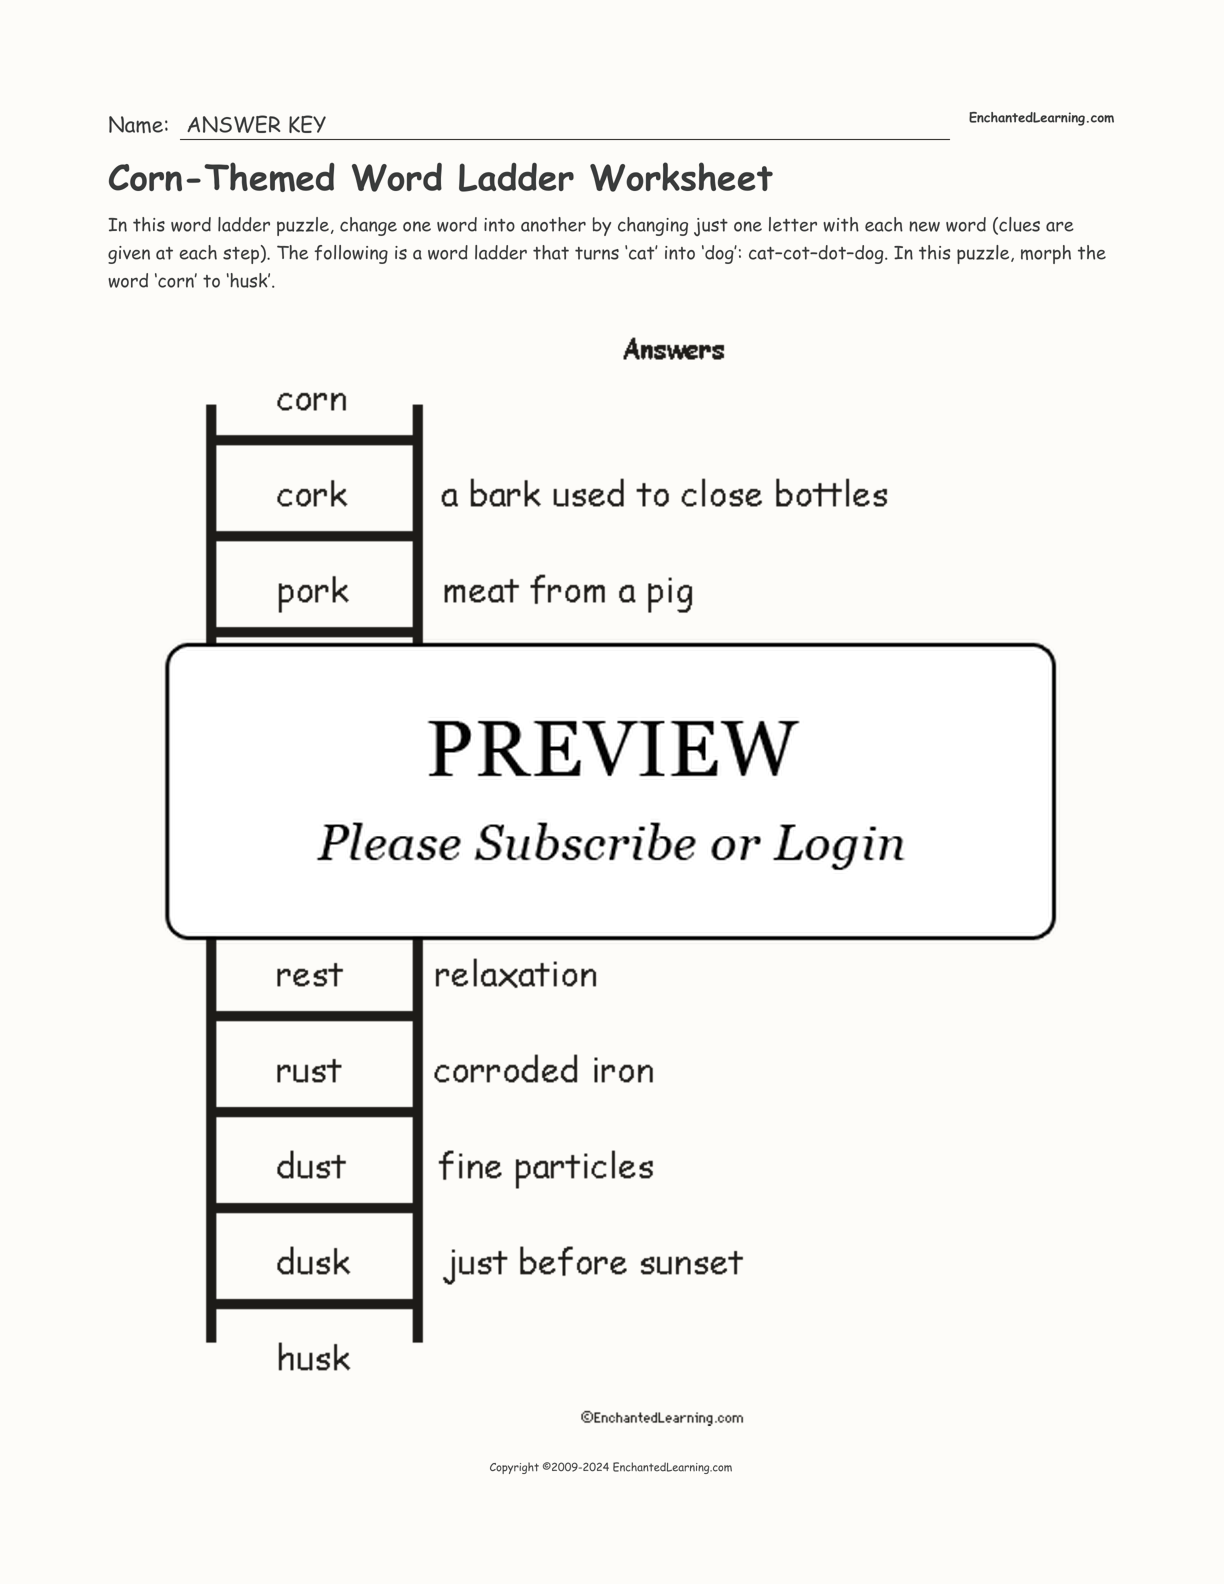 Corn-Themed Word Ladder Worksheet interactive worksheet page 2